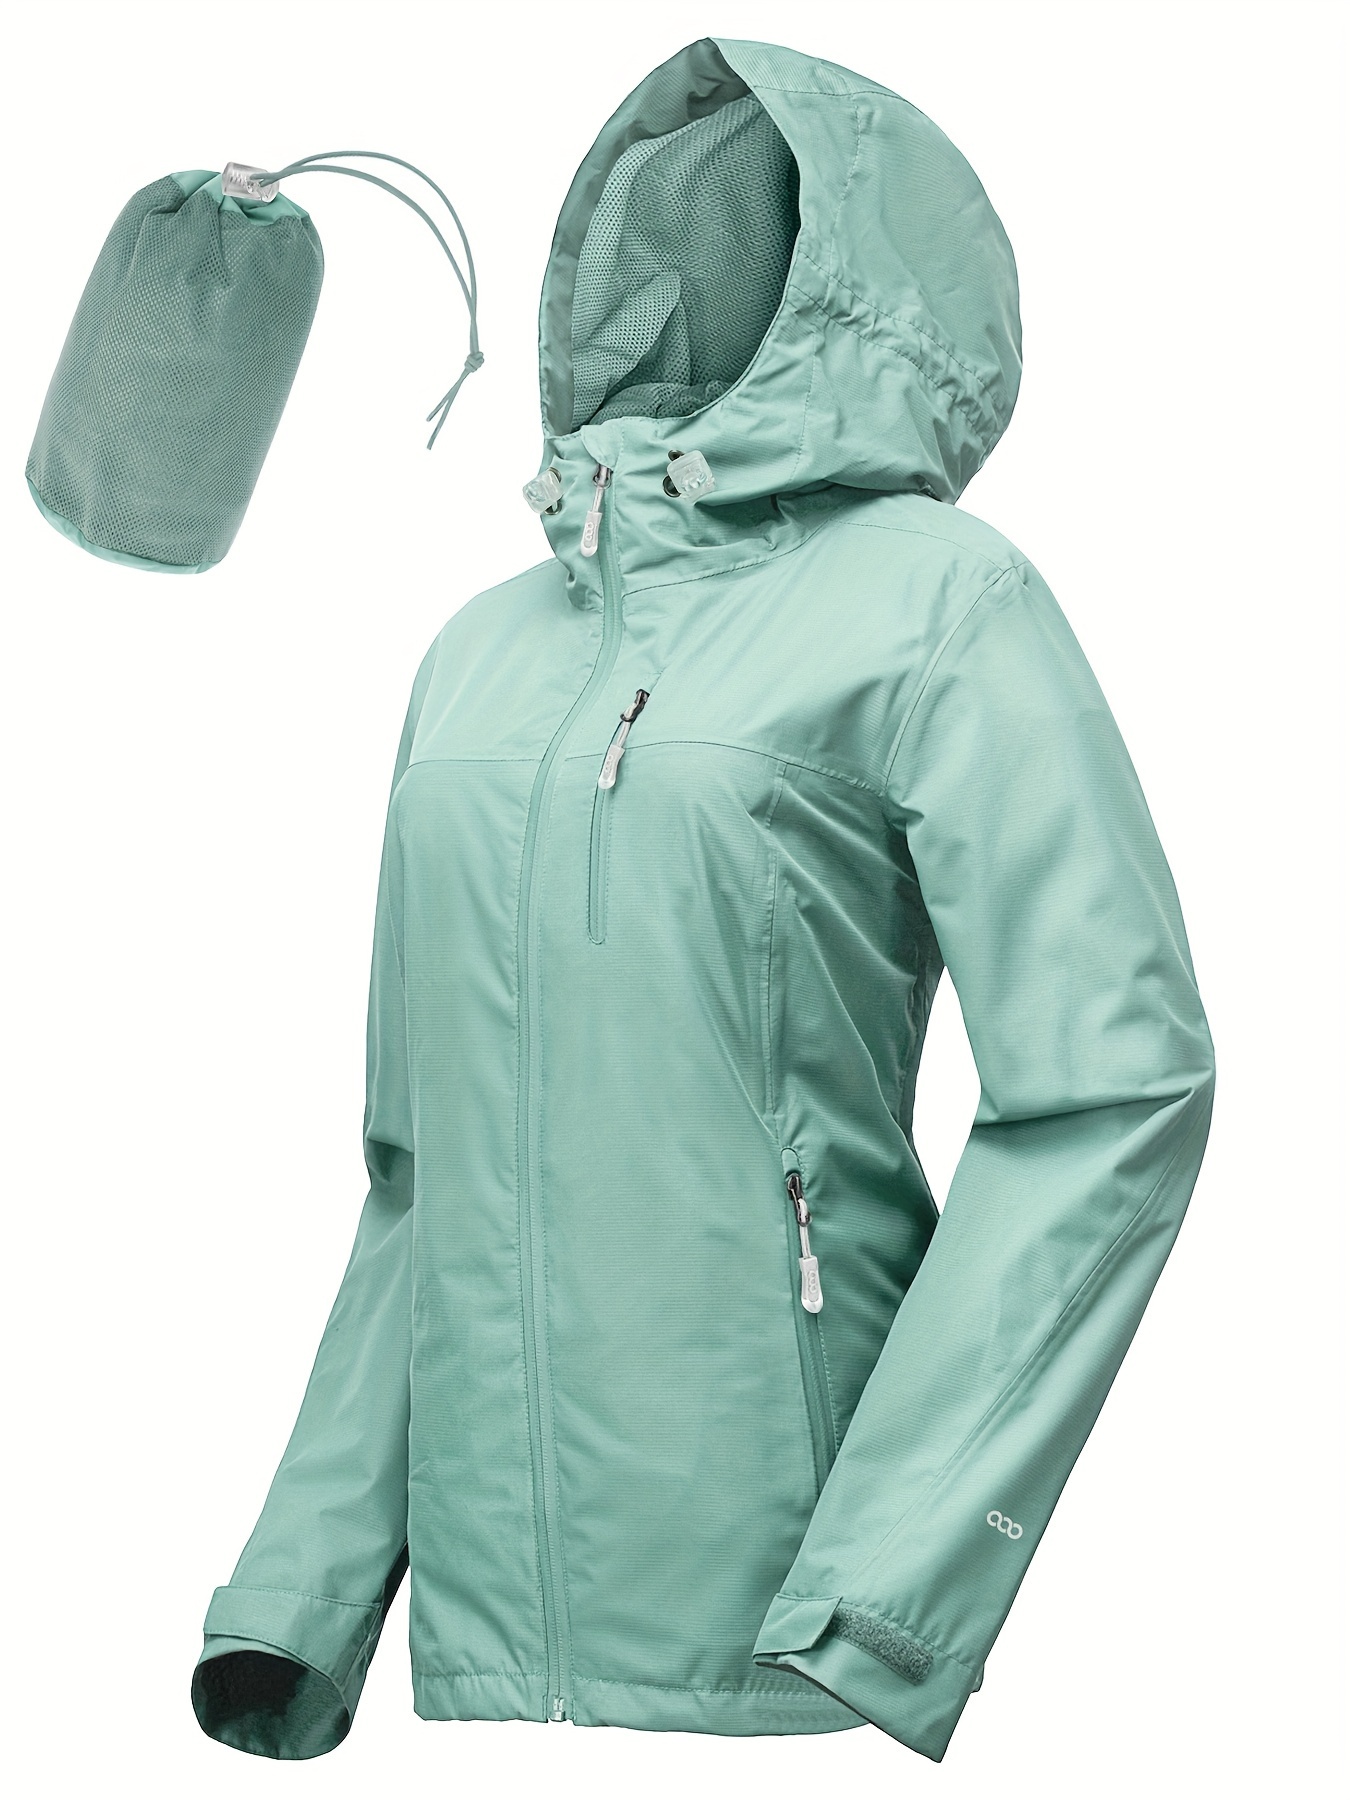 000ft Women's Packable Rain Jacket - Lightweight, Waterproof, Adjustable Drawstring Hood, Ideal For Cycling, Outdoor Activities, Windbreaker With